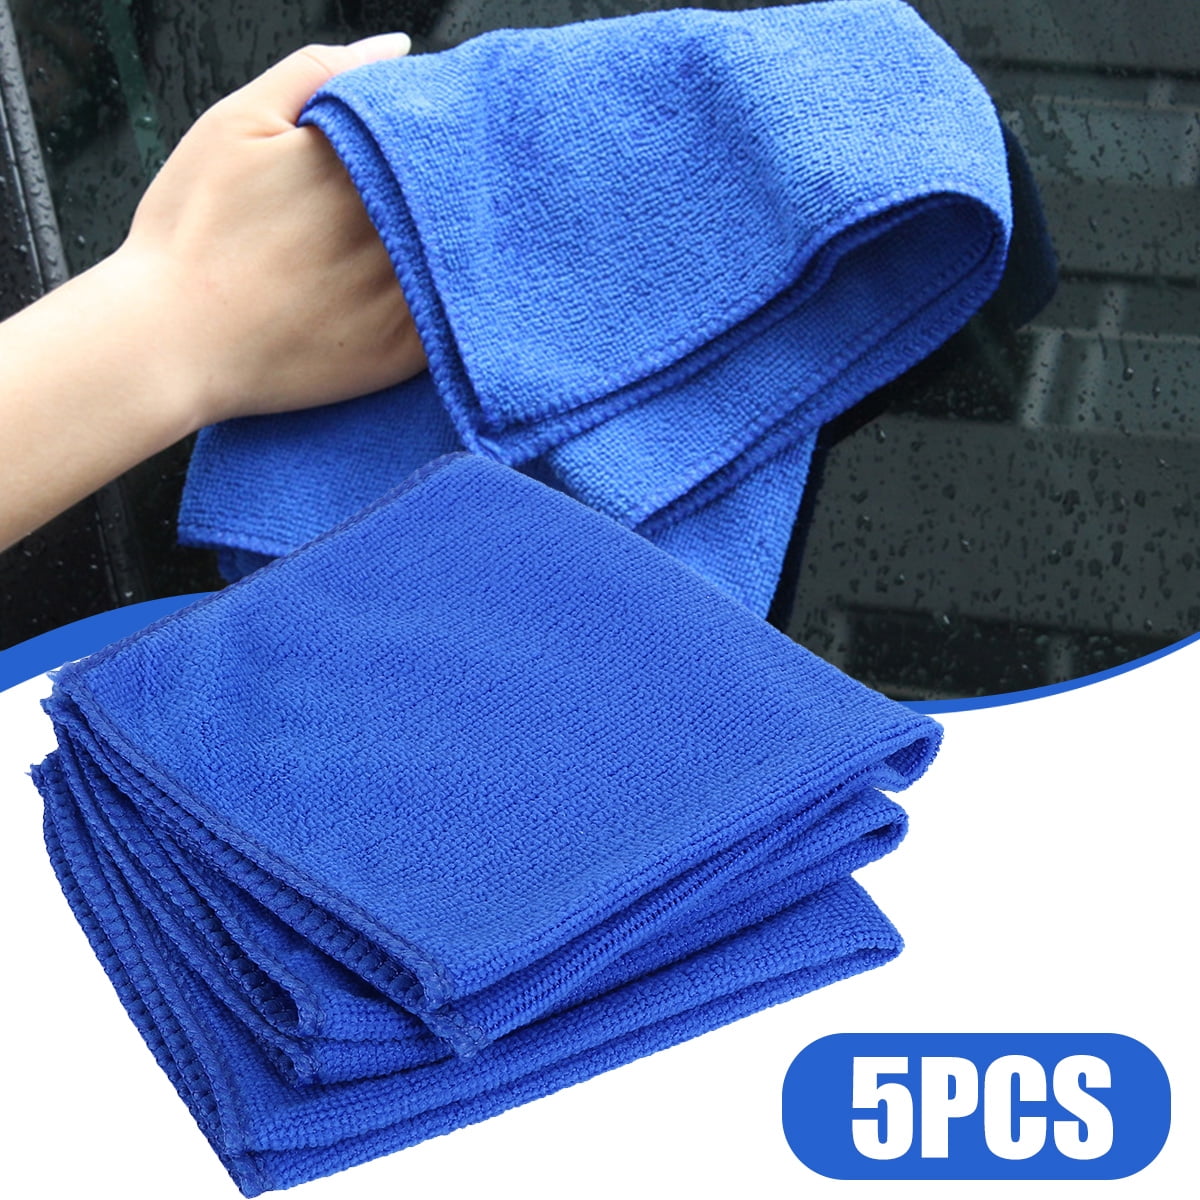 AllTopBargains 5 PC Multi Purpose Cleaning Microfiber Cloths Set Rag Window Cleaner Towel Car, Blue